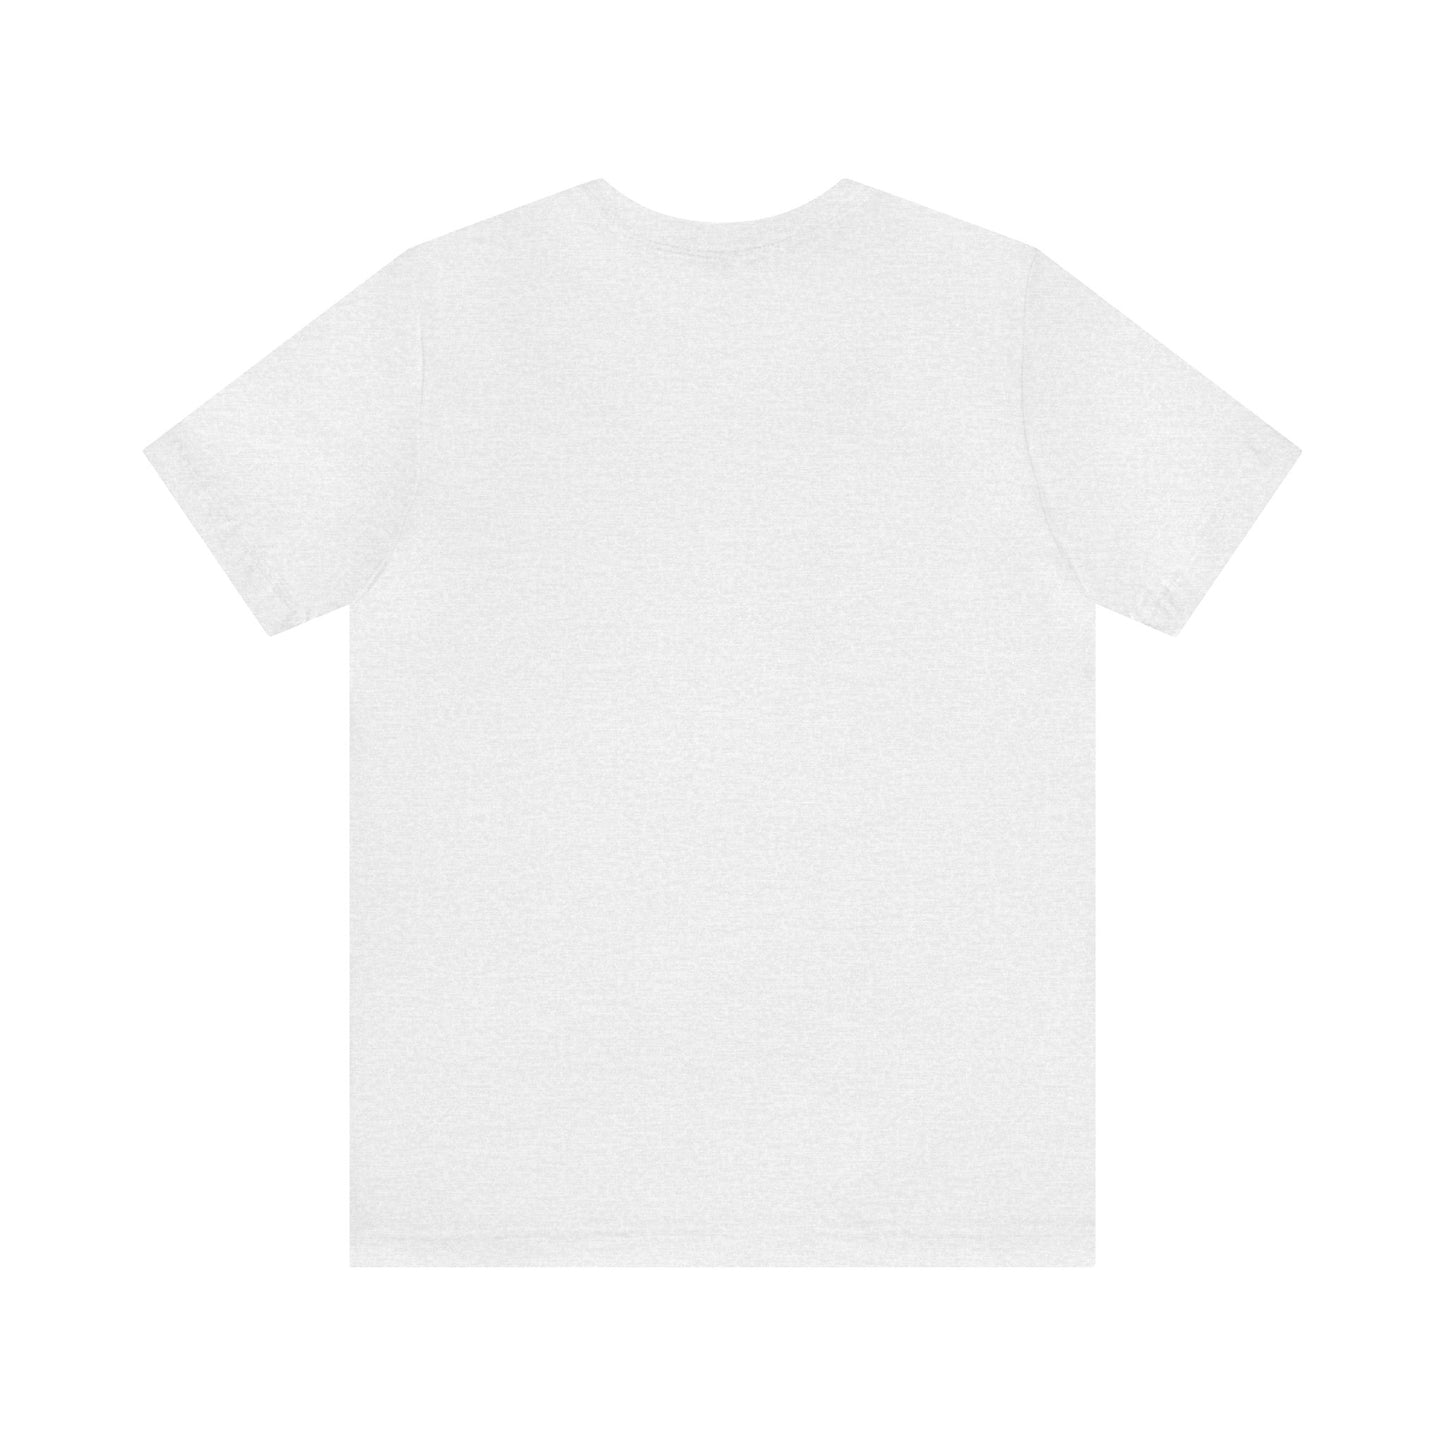 'Self Love' Short Sleeve T-shirt - LOVE Women Collection